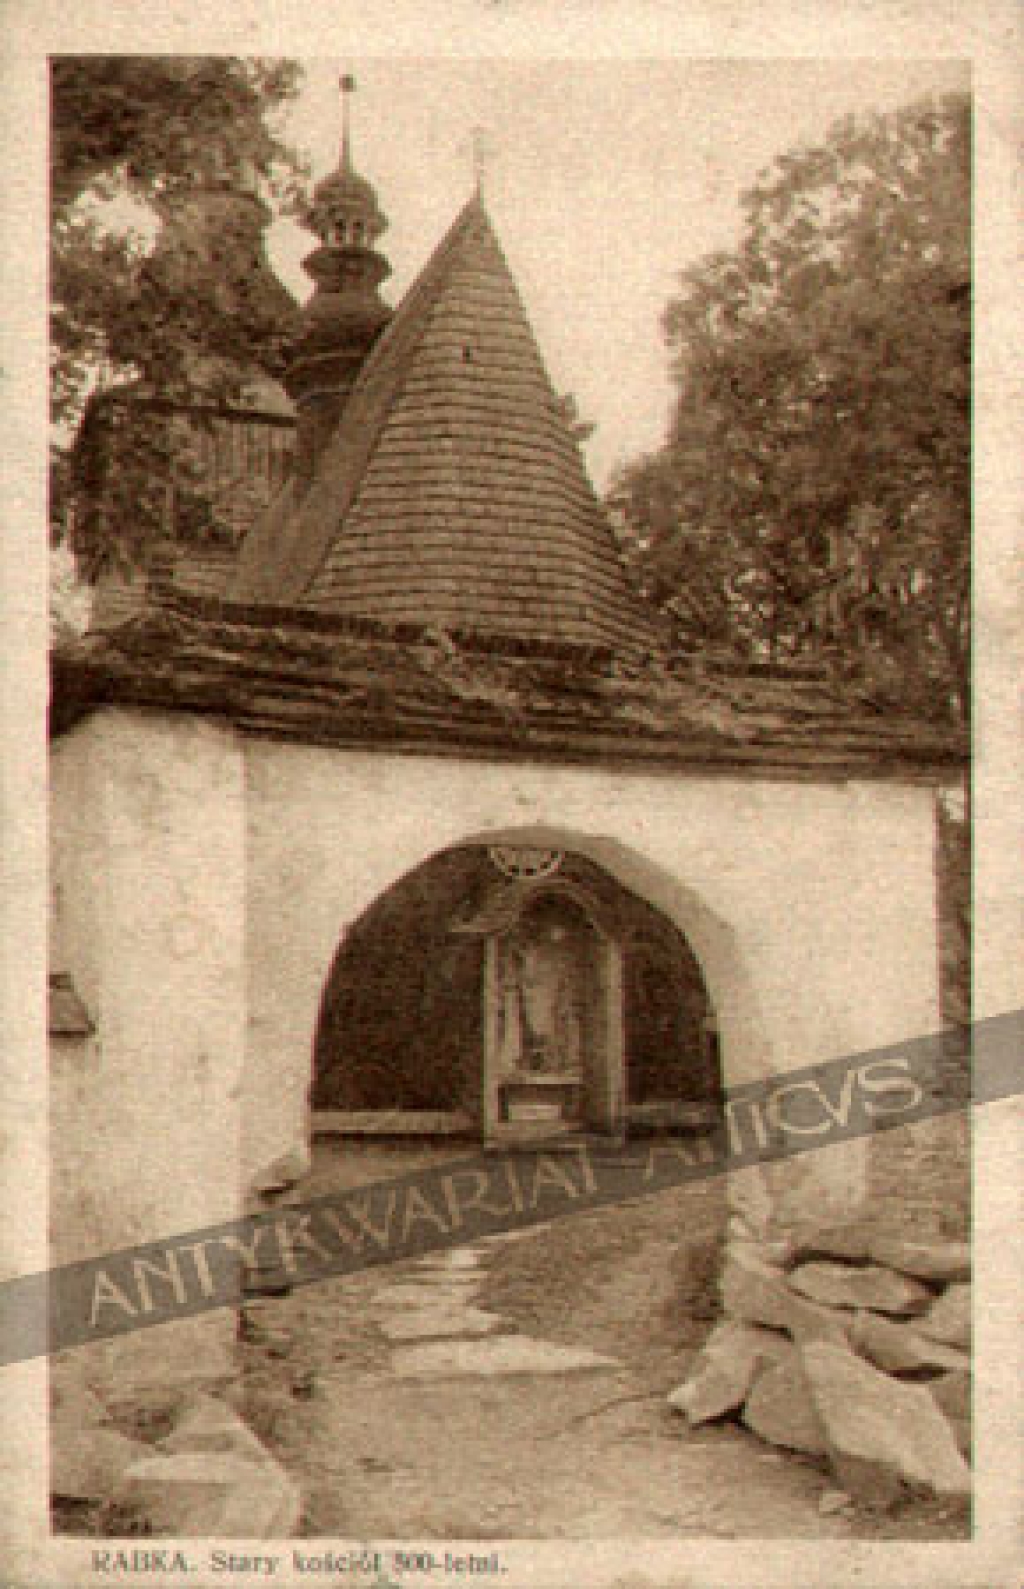 [pocztówka, ok. 1930] Rabka. Stary kościół 500-letni